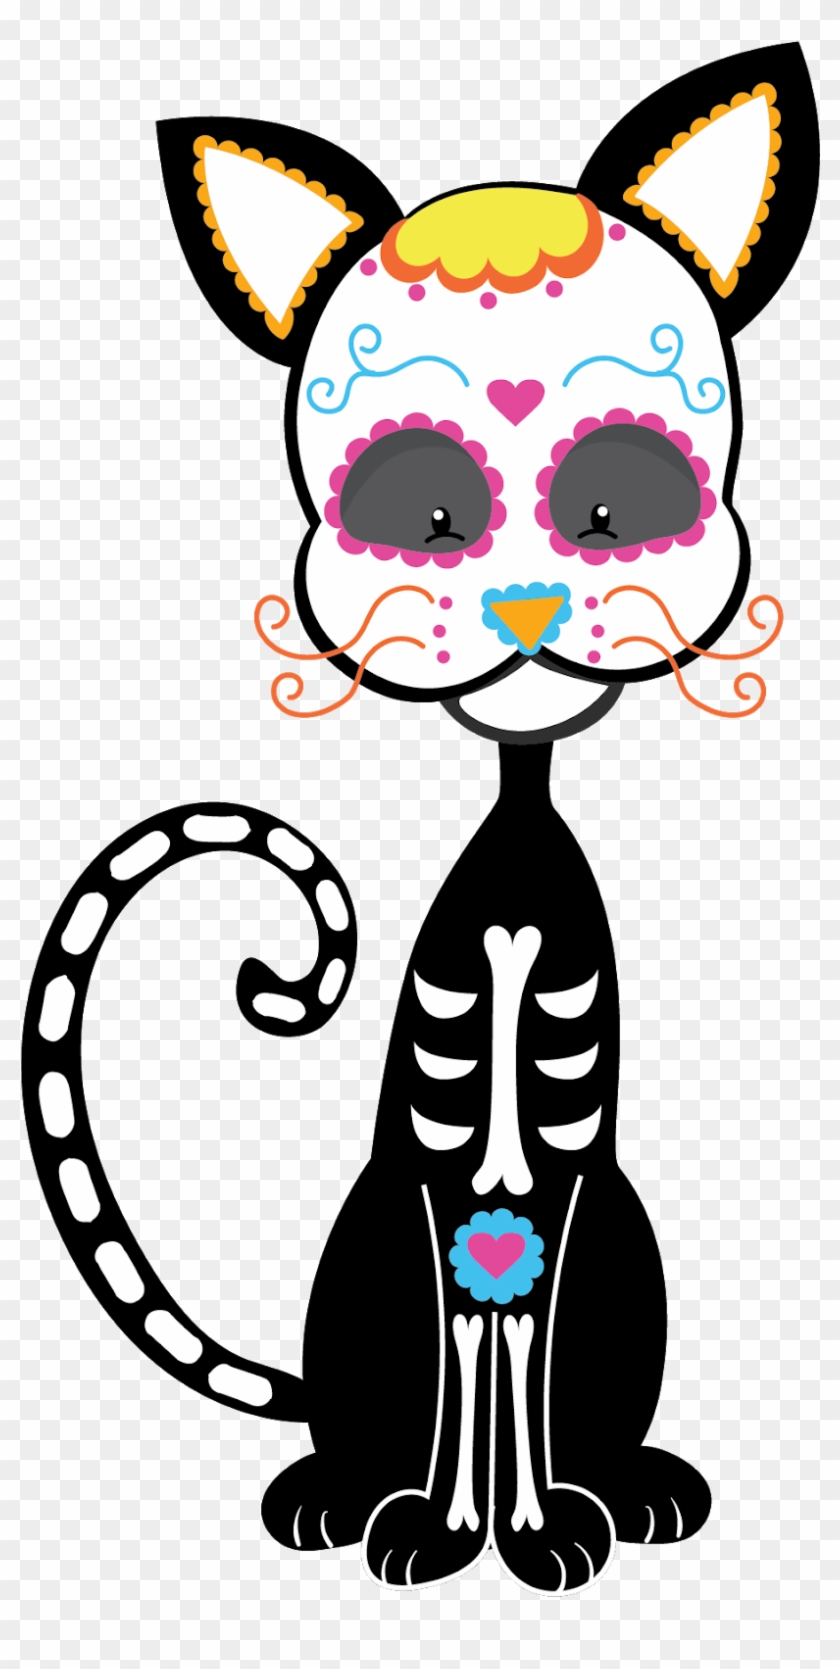 Coloring Calaveras And Alebrijes Can Be An Appropriate - Gato Dia De Muerto Png #1371995